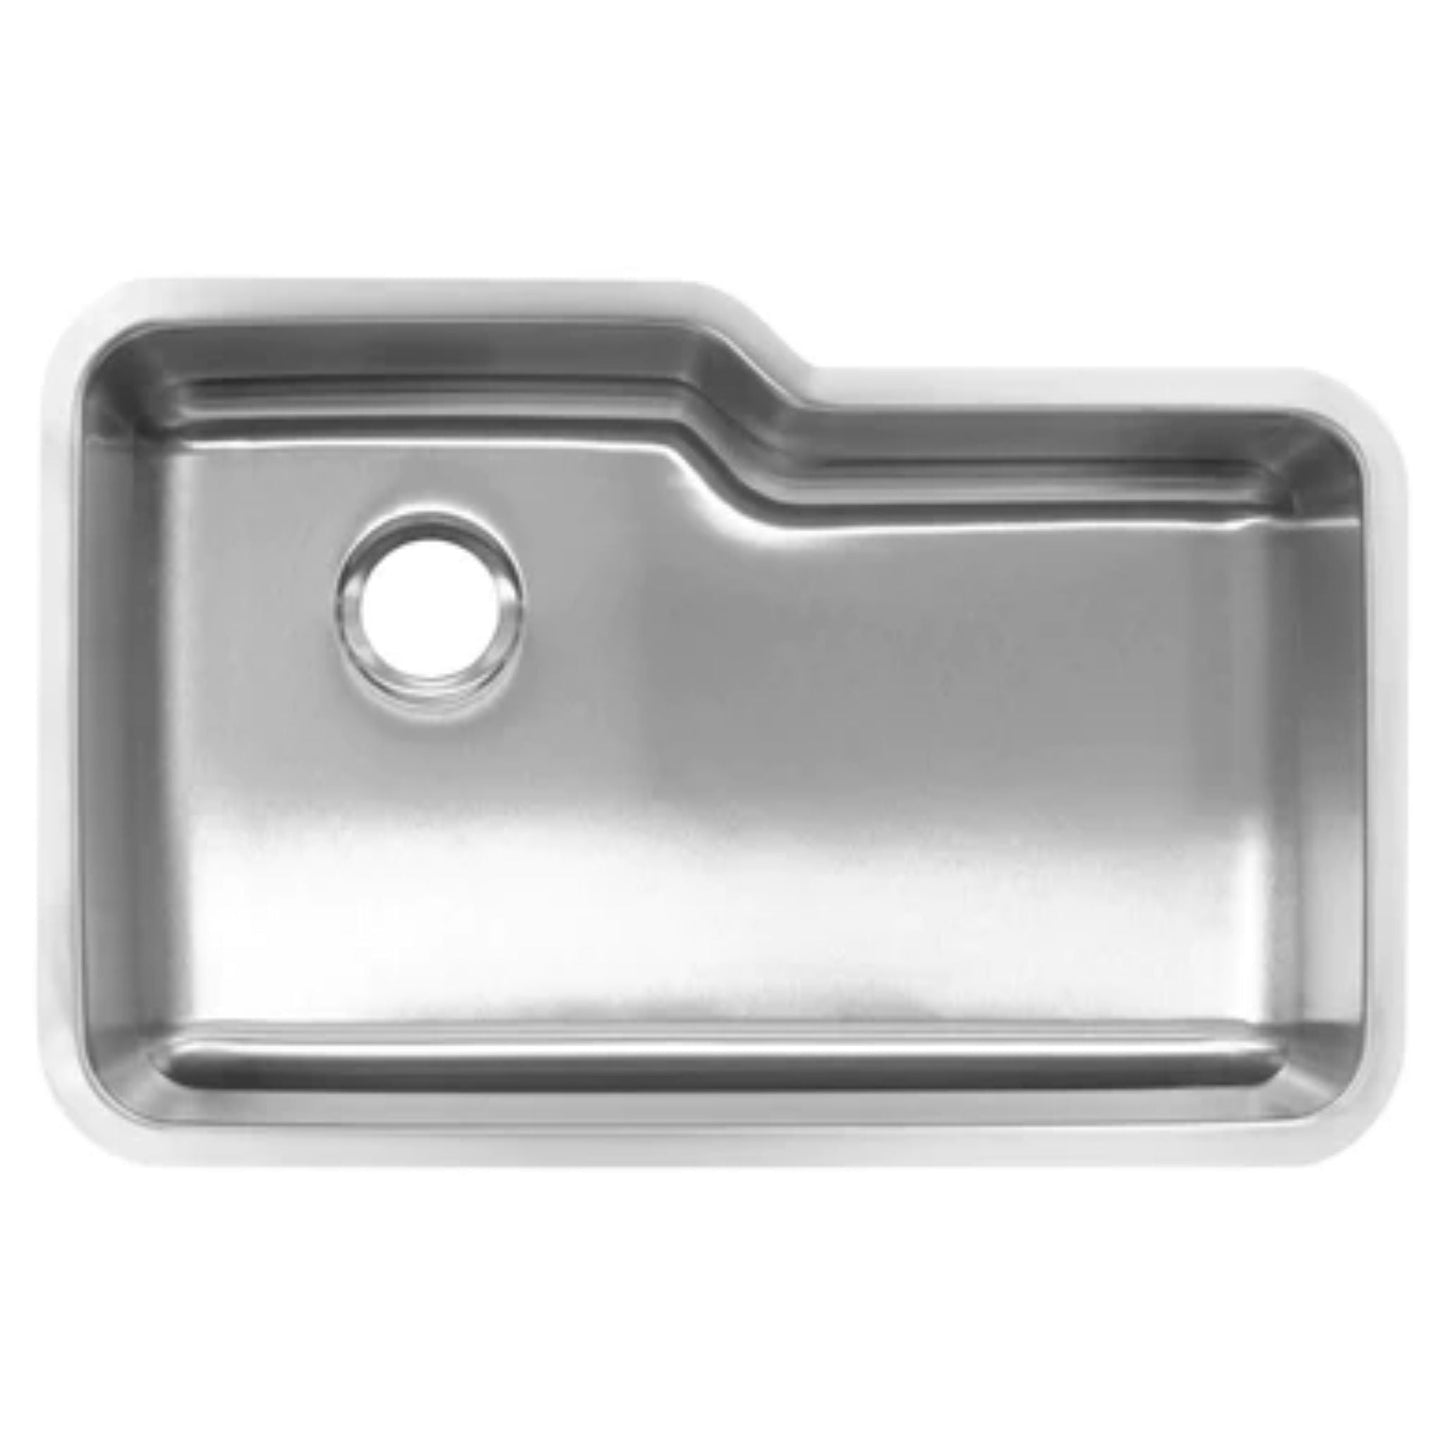 LessCare Undermount Stainless Steel Single Bowl Kitchen Sink - L108